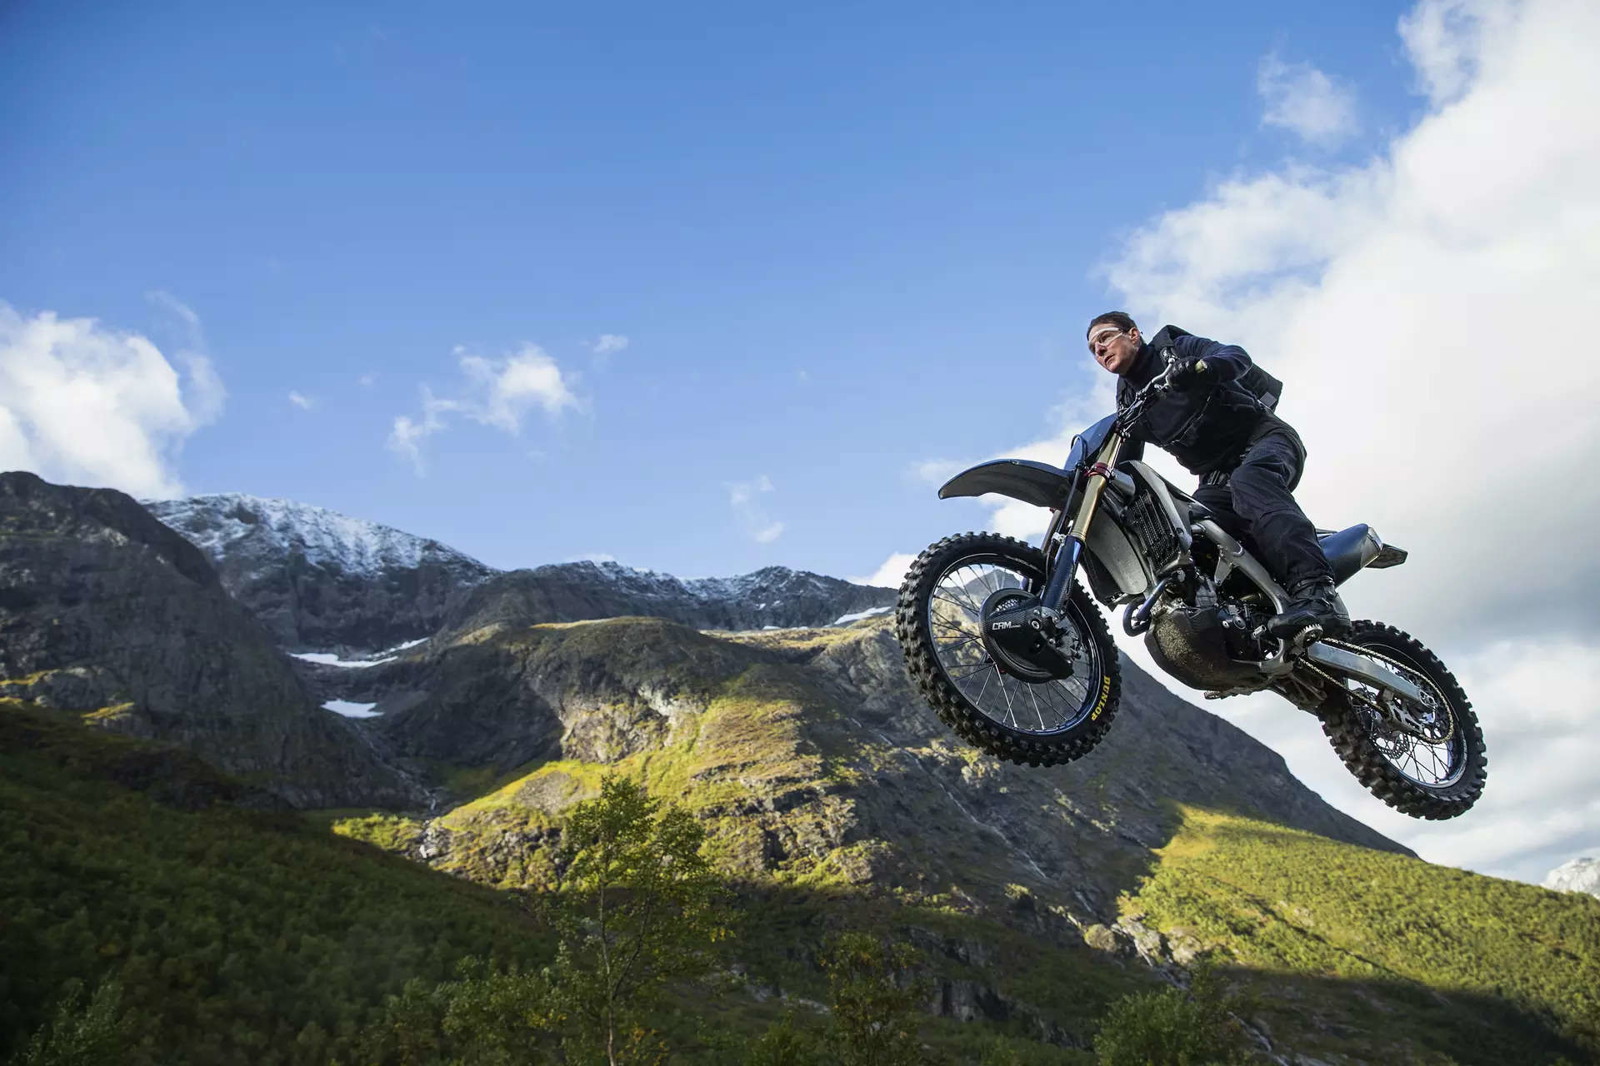 Tom Cruise's insane motorcycle stunt